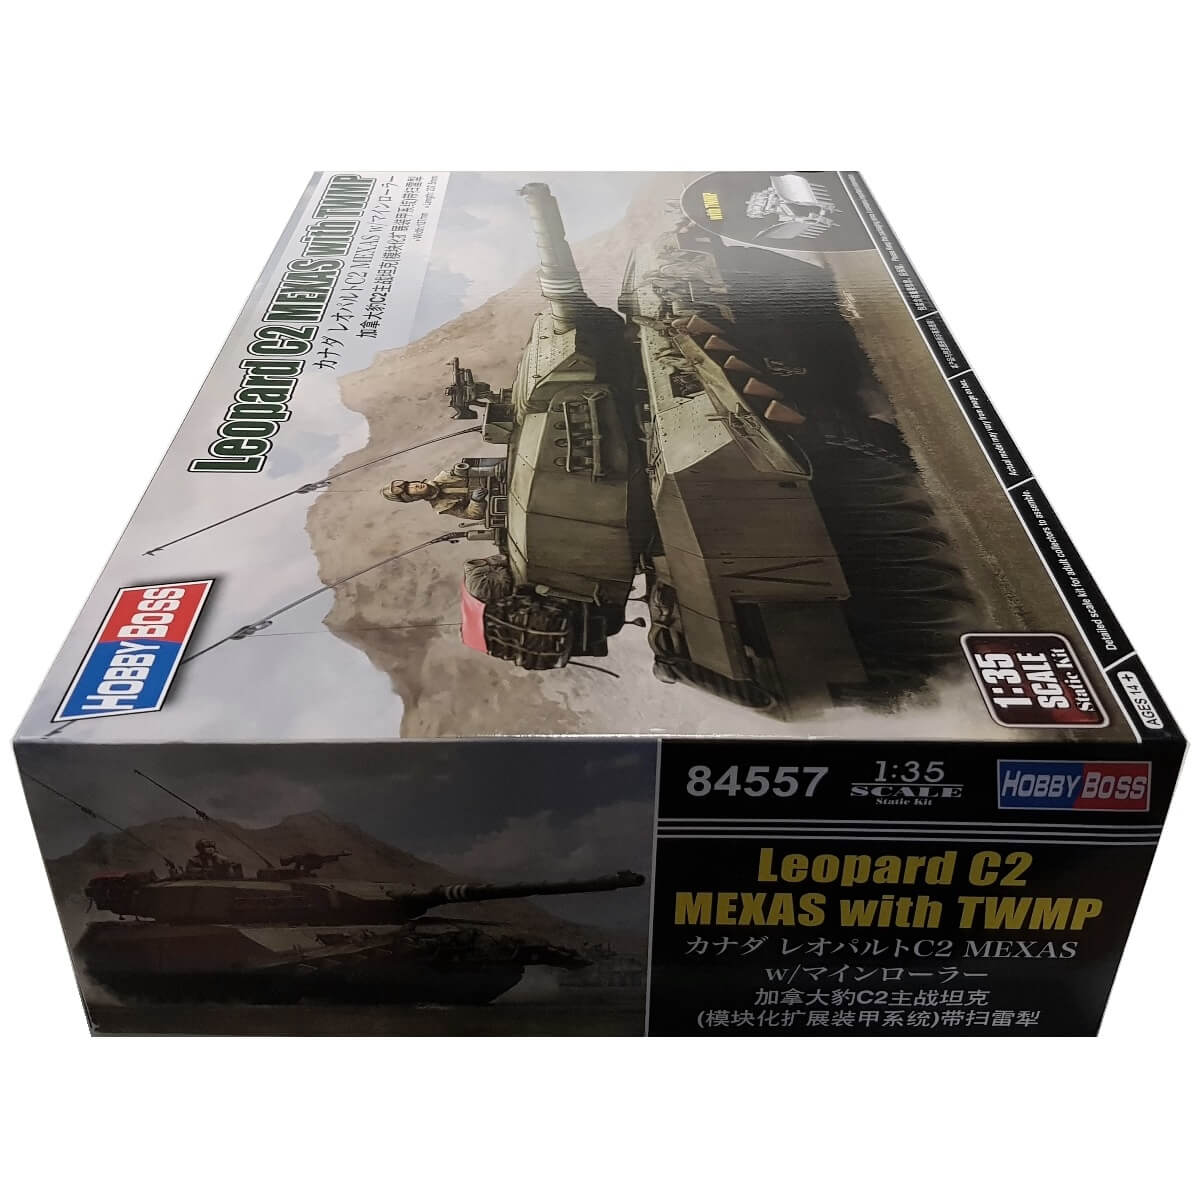 1:35 Leopard C2 MEXAS with TWMP - HOBBY BOSS